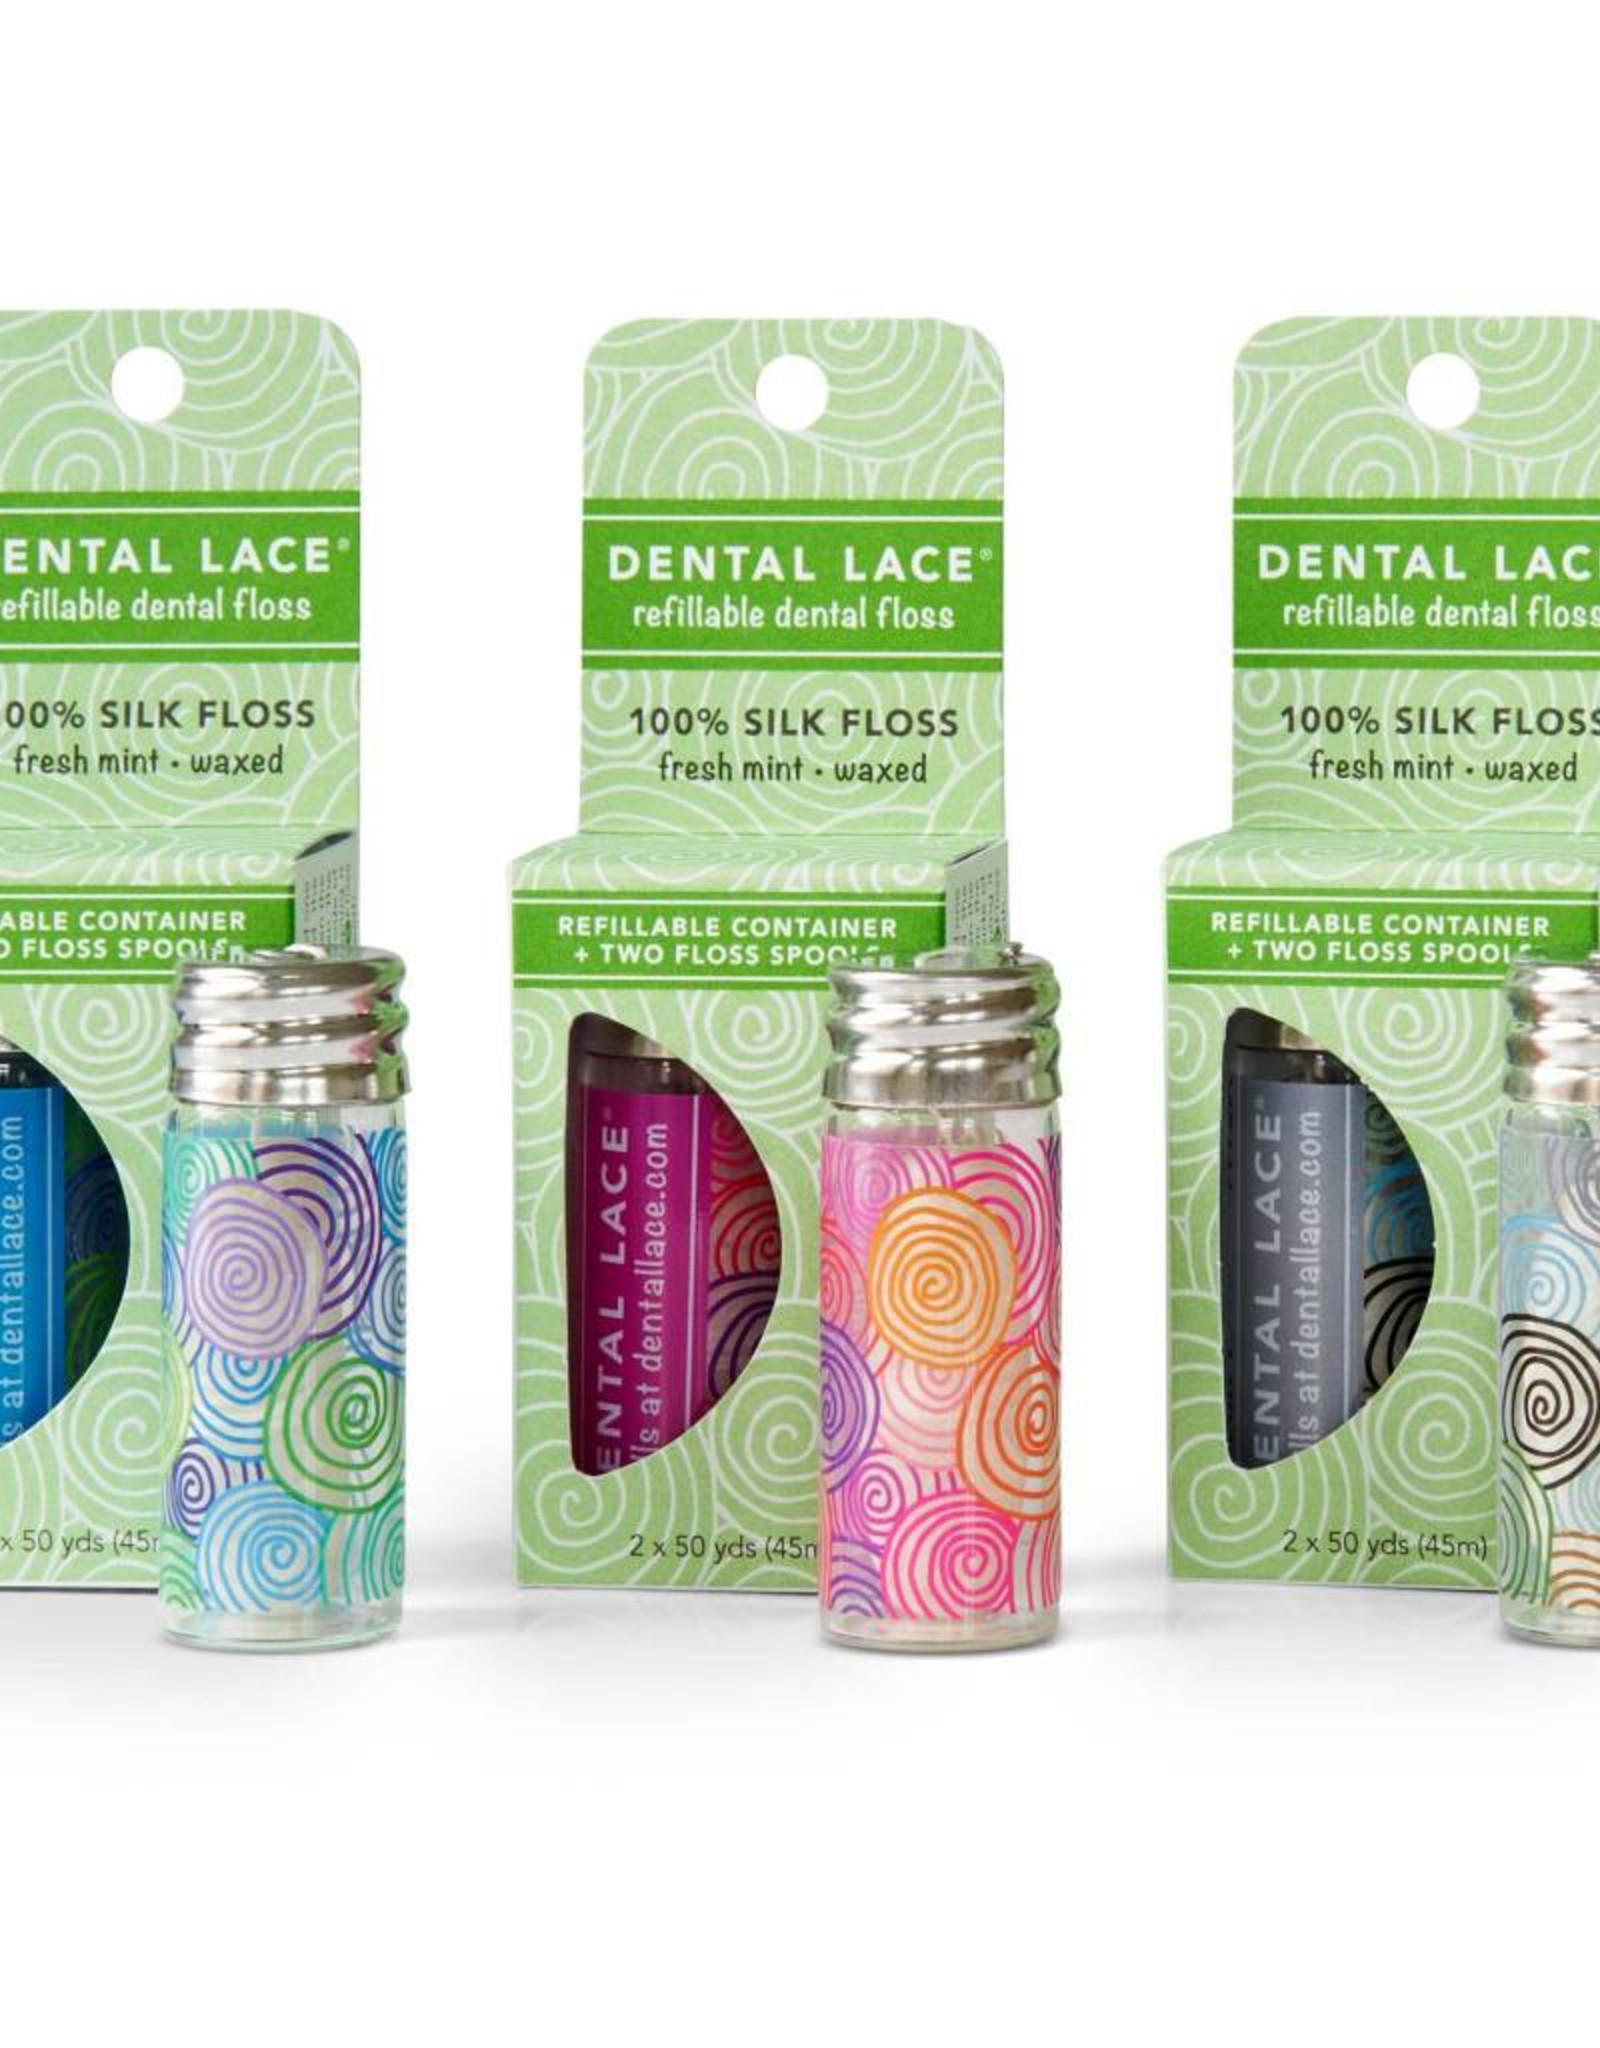 Dental Lace Dental Lace